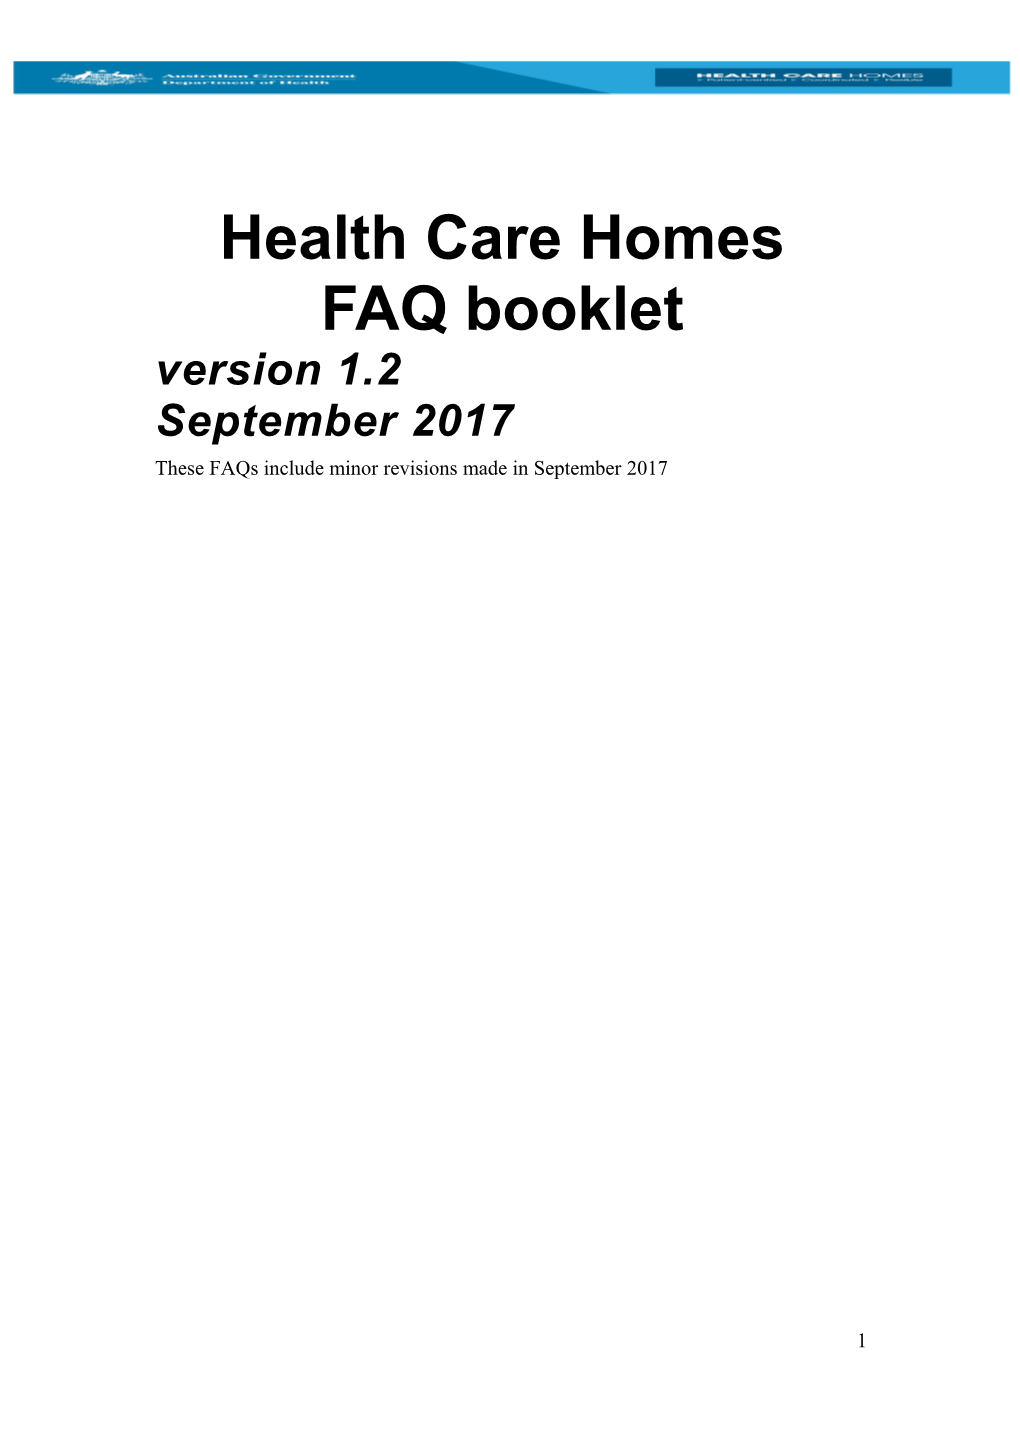 Health Care Homes FAQ Booklet Version 1.2 September 2017